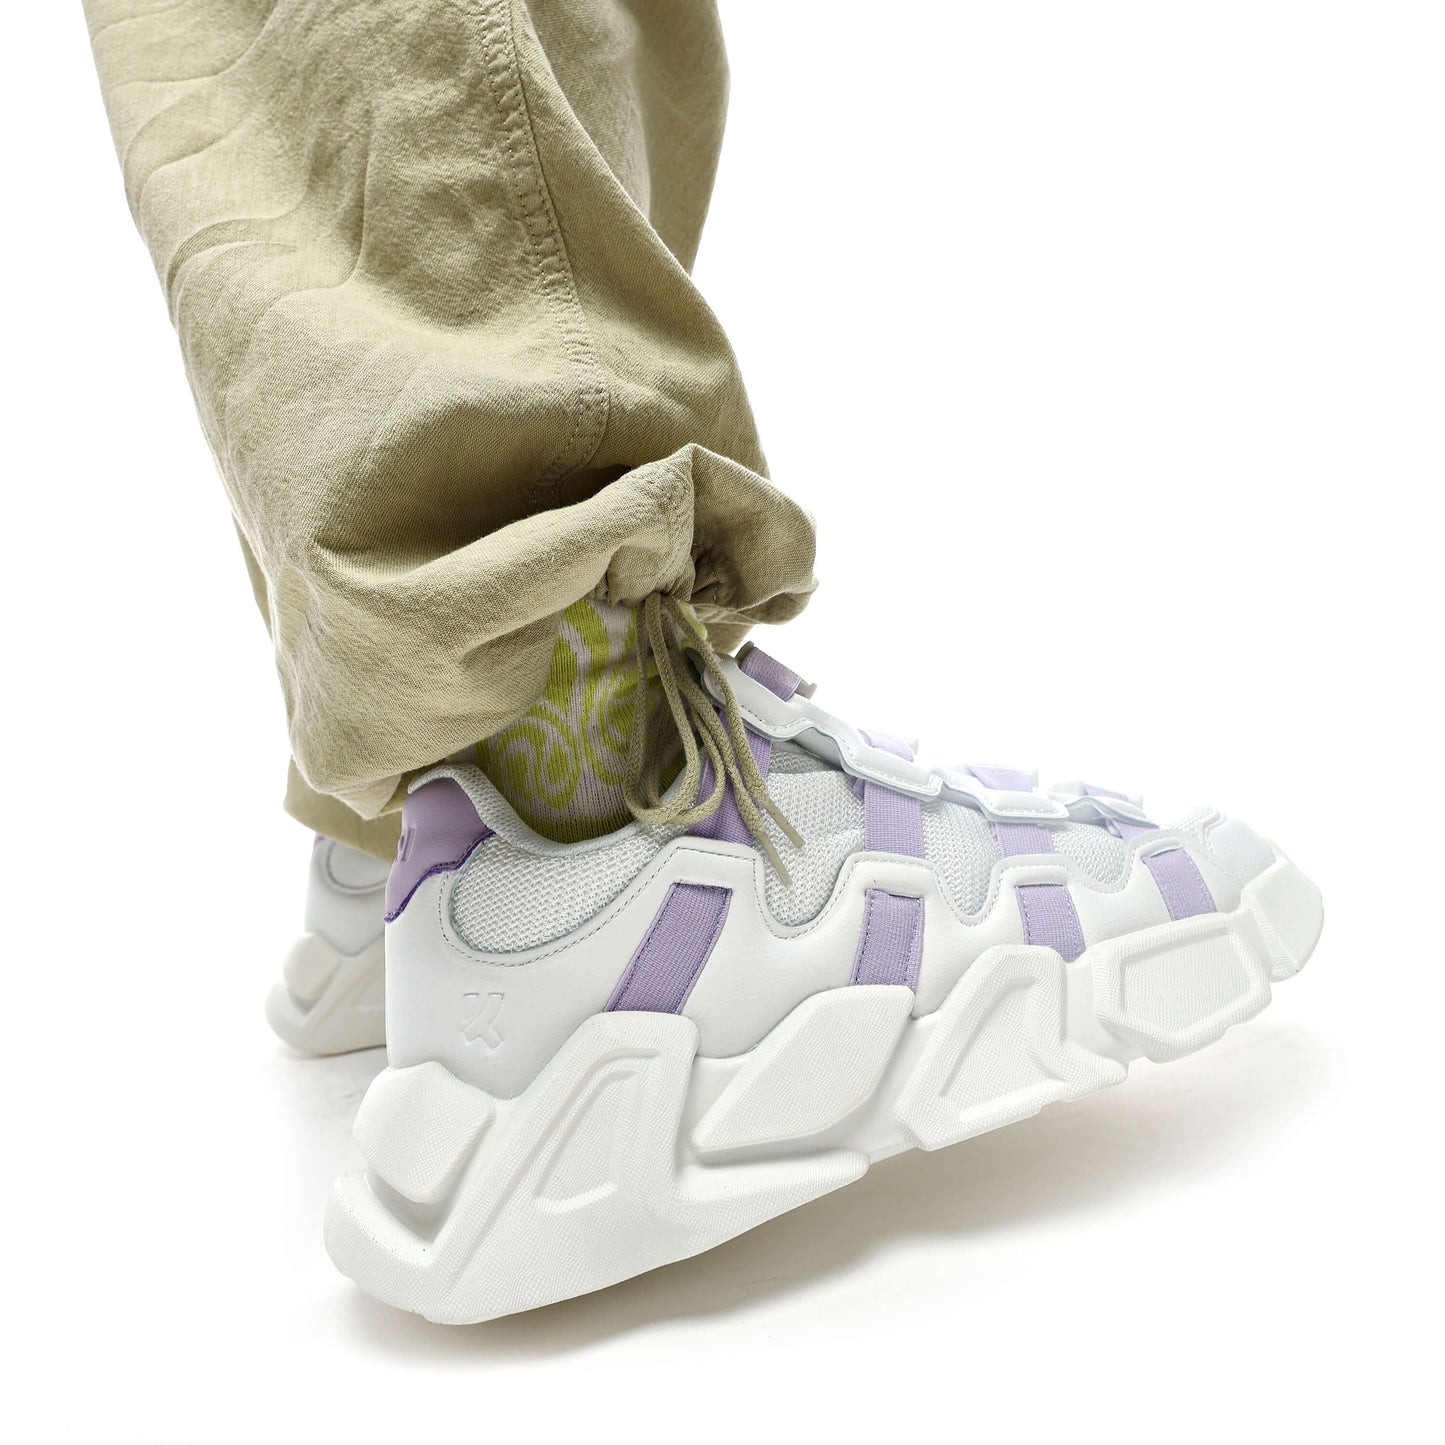 Lavender Sugar Beast Trainers - Trainers - KOI Footwear - White - Model Side View